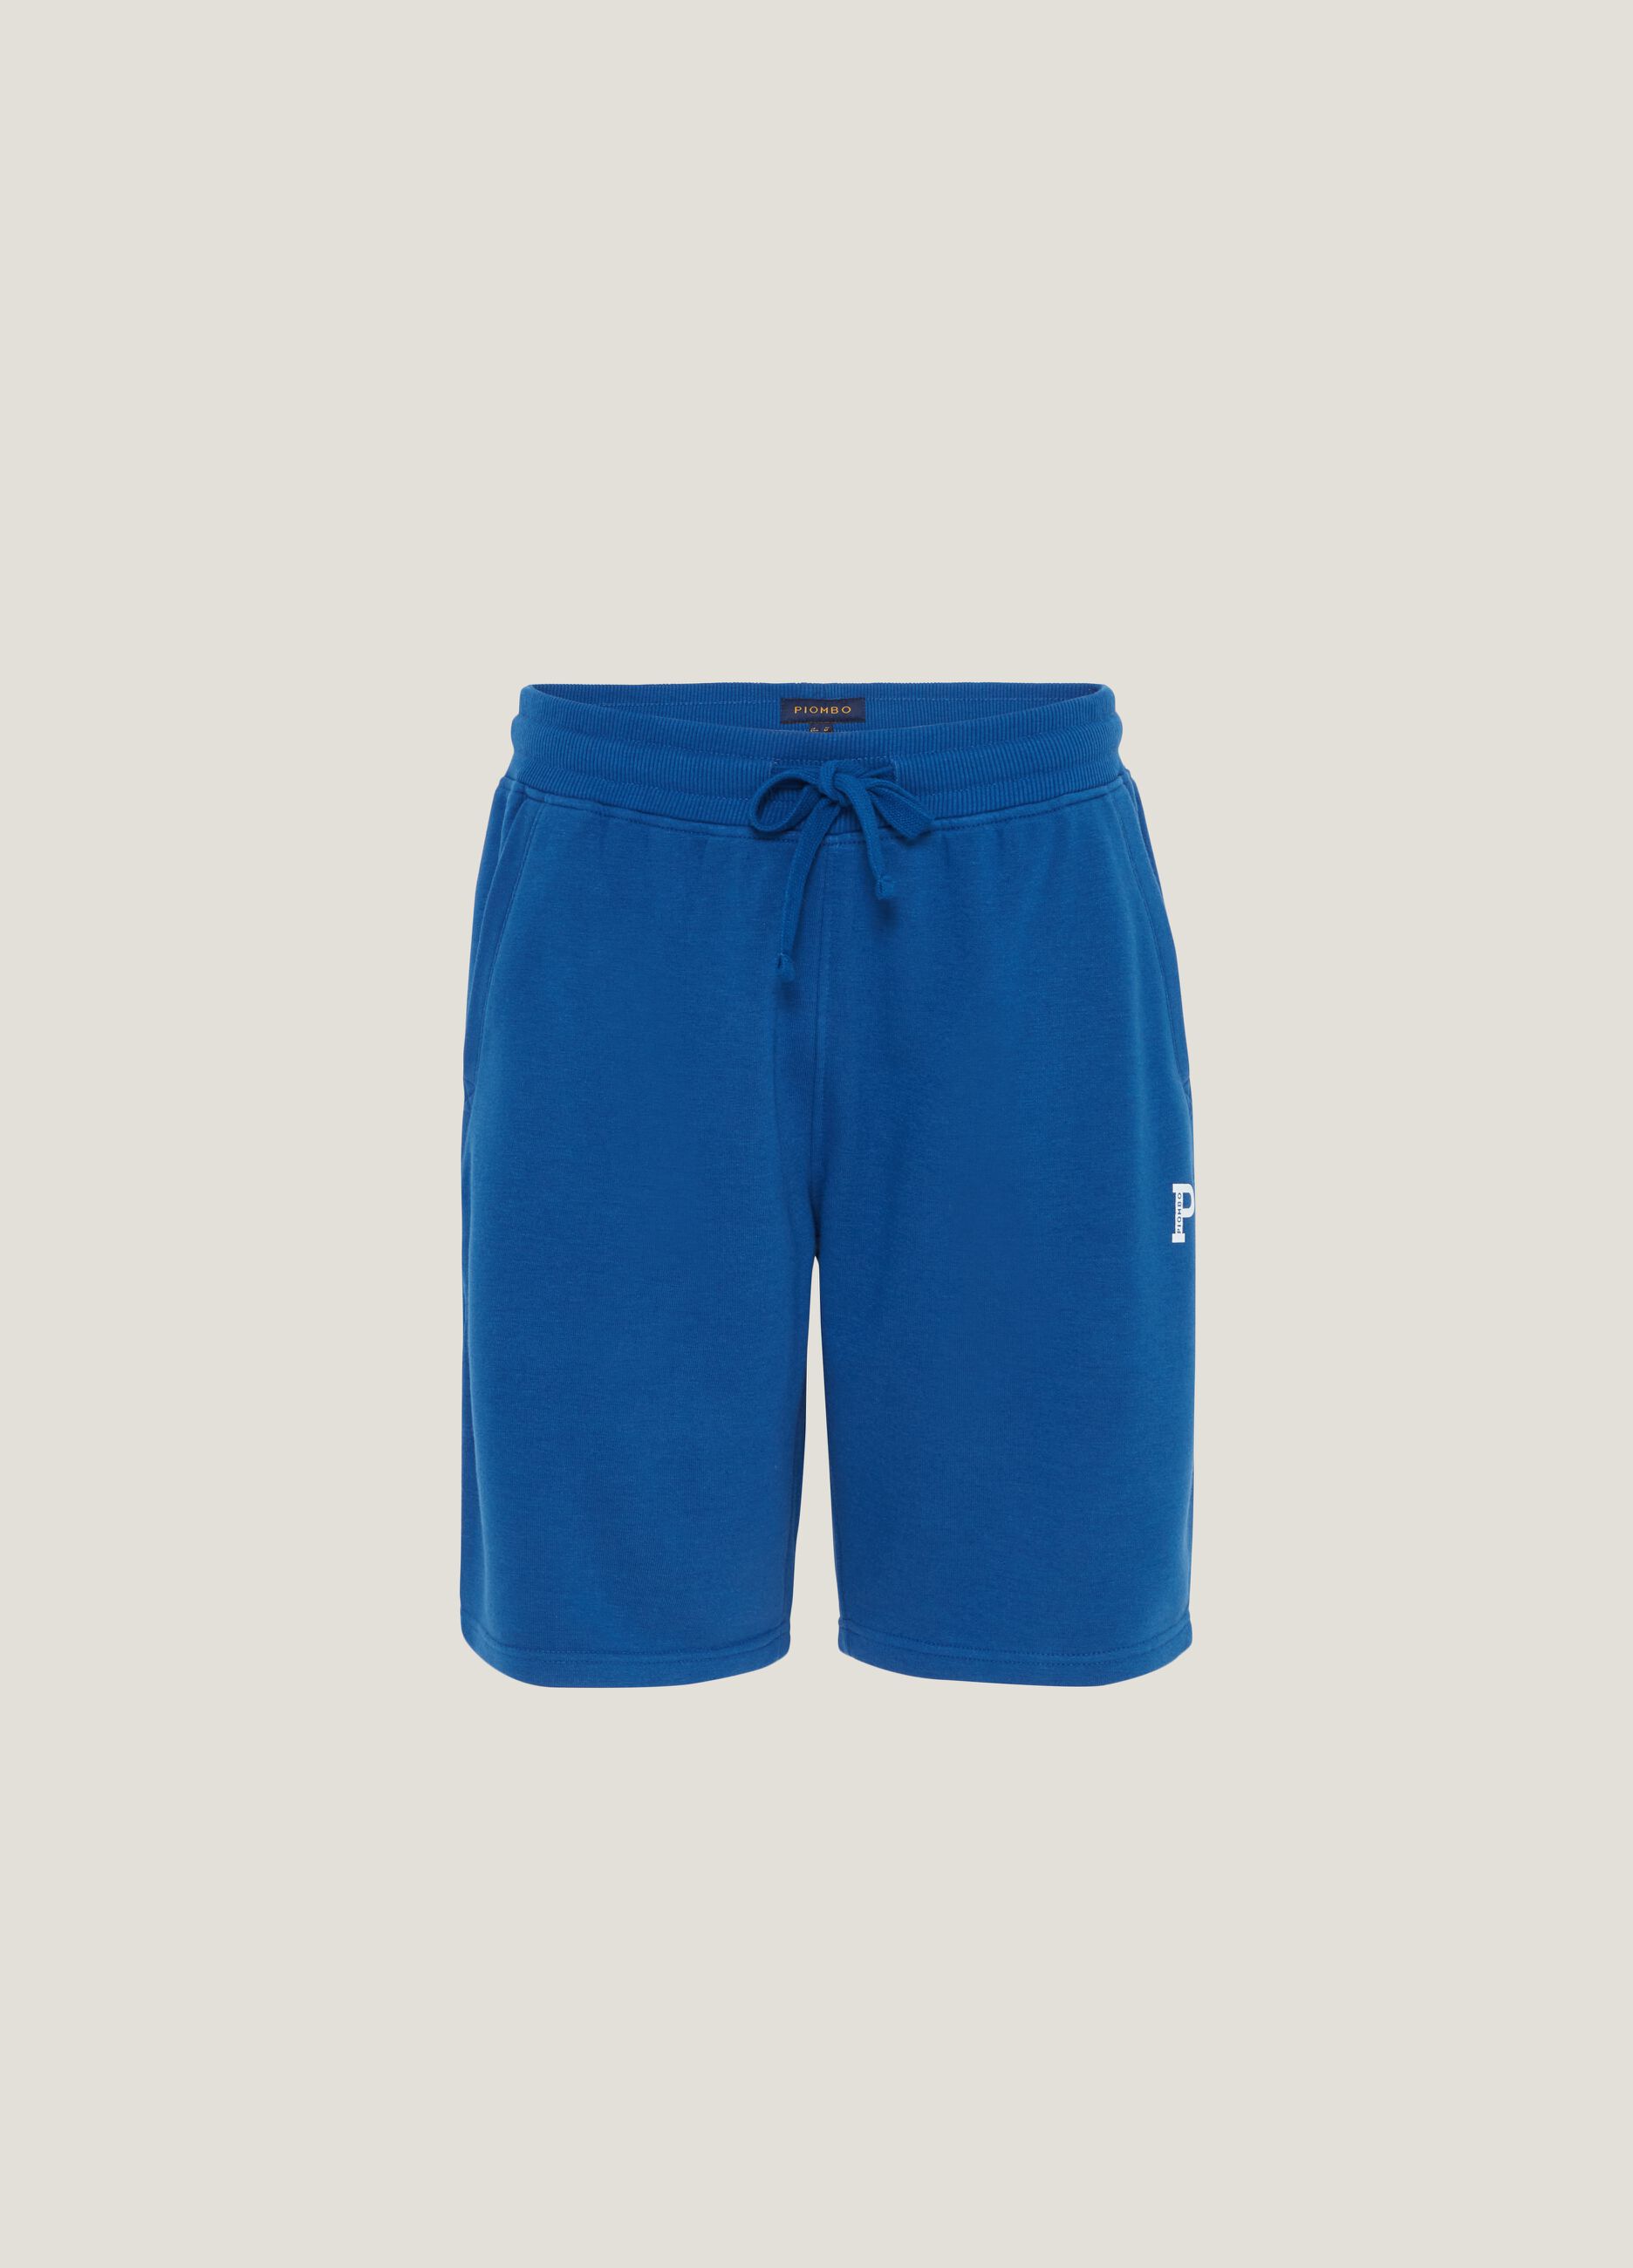 Fleece Bermuda shorts with print